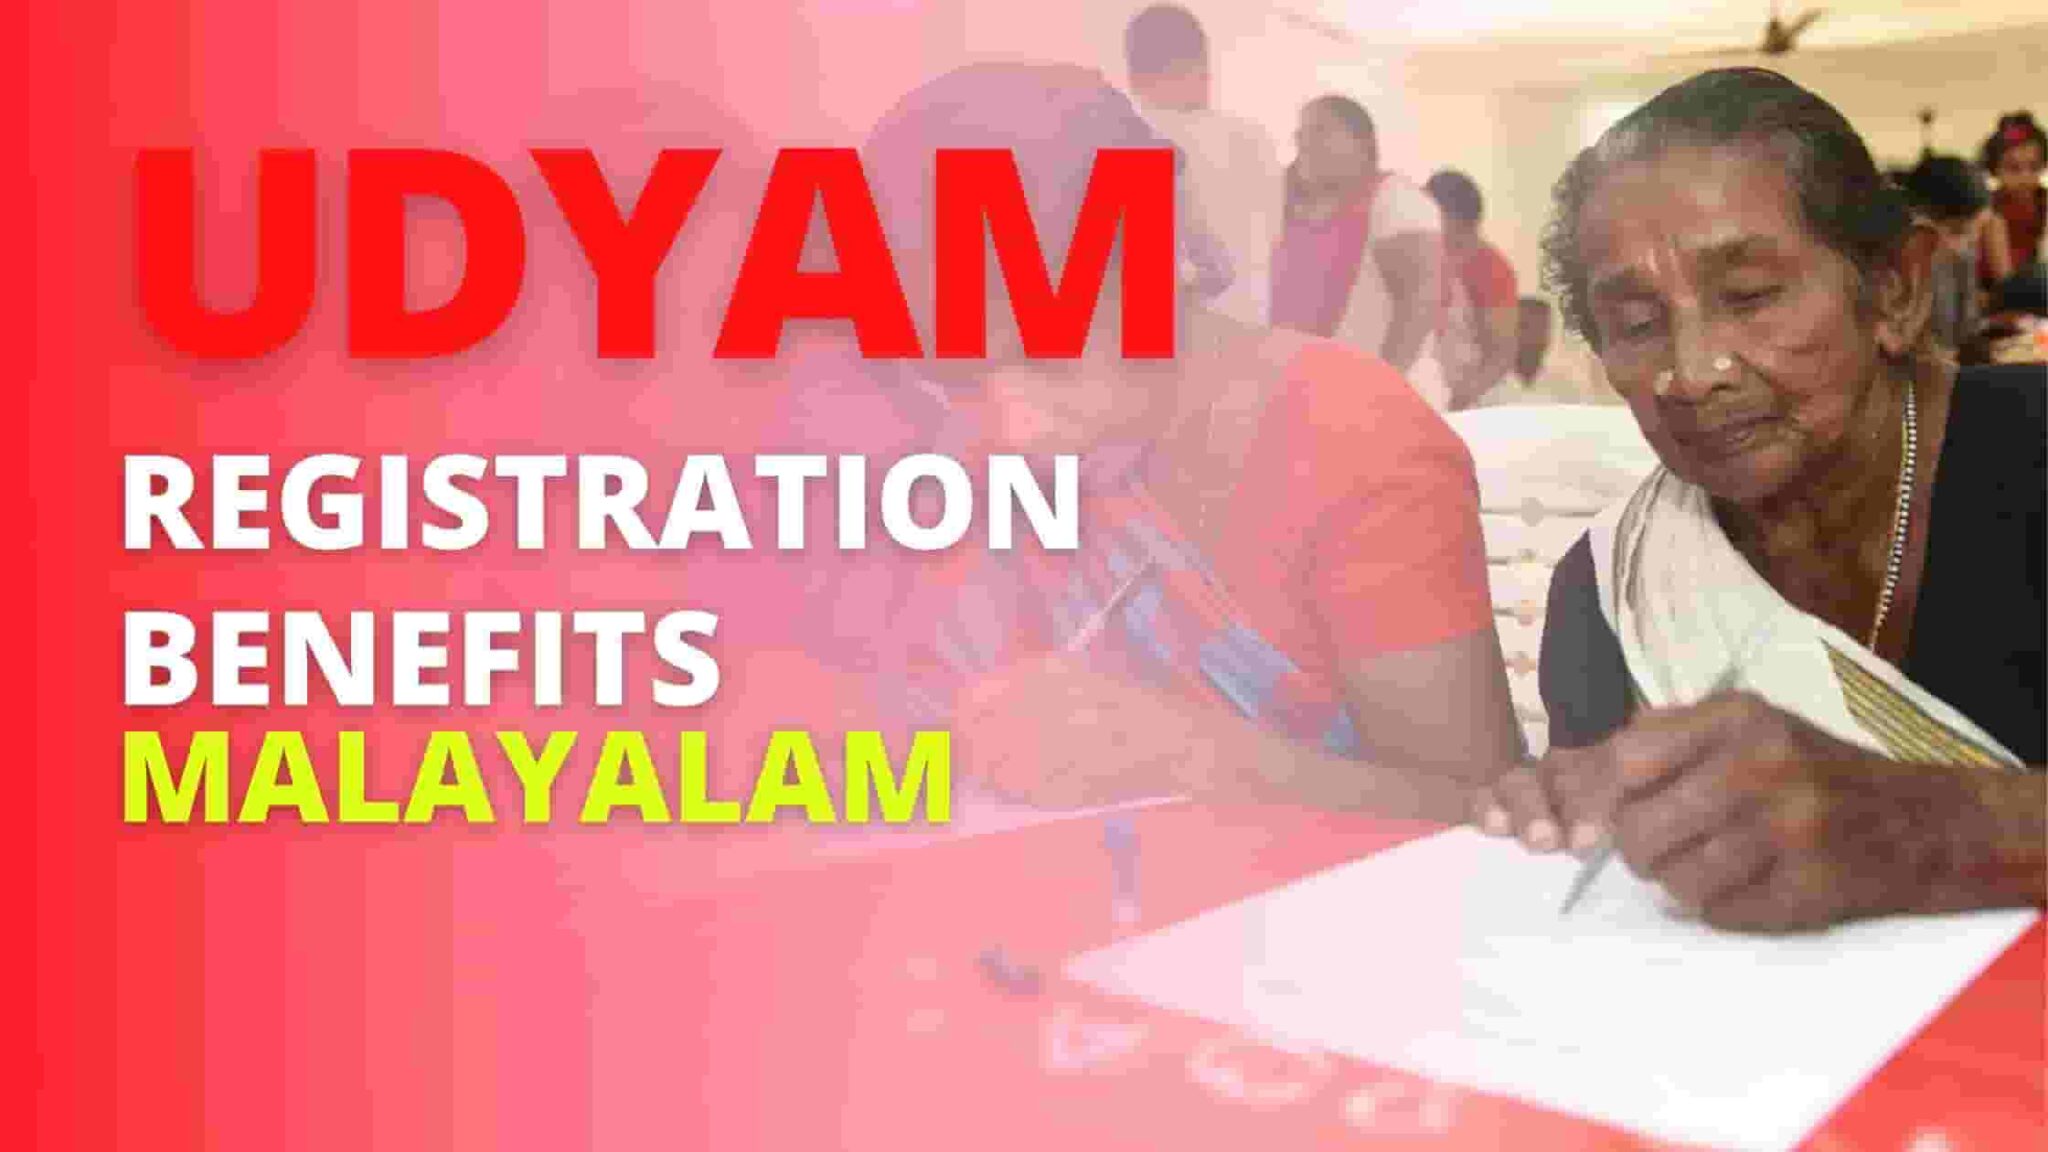 Udyam registration benefits in Malayalam